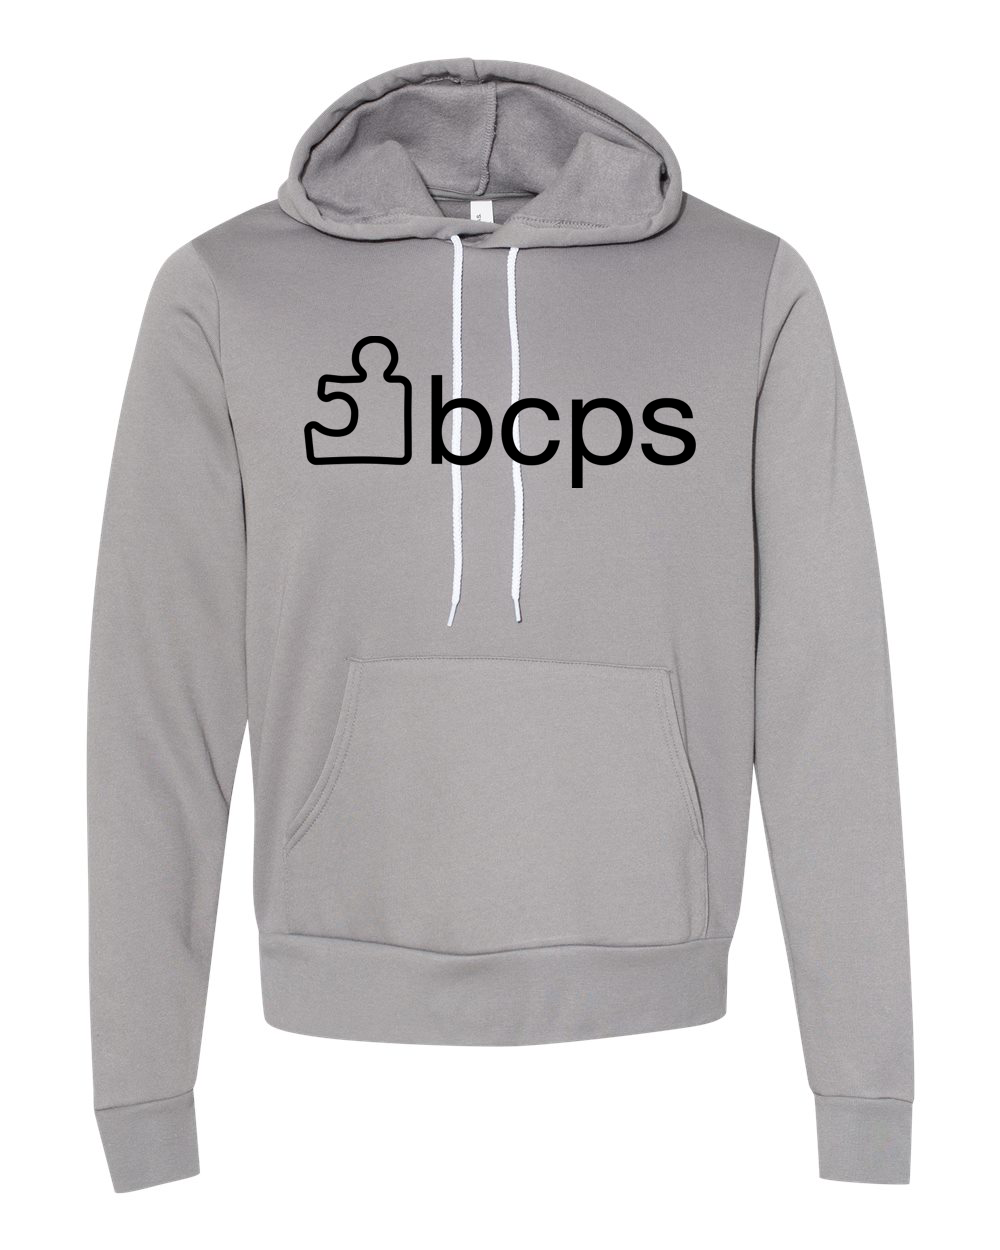 BCPS | Bella Canvas | Hooded Sweatshirt